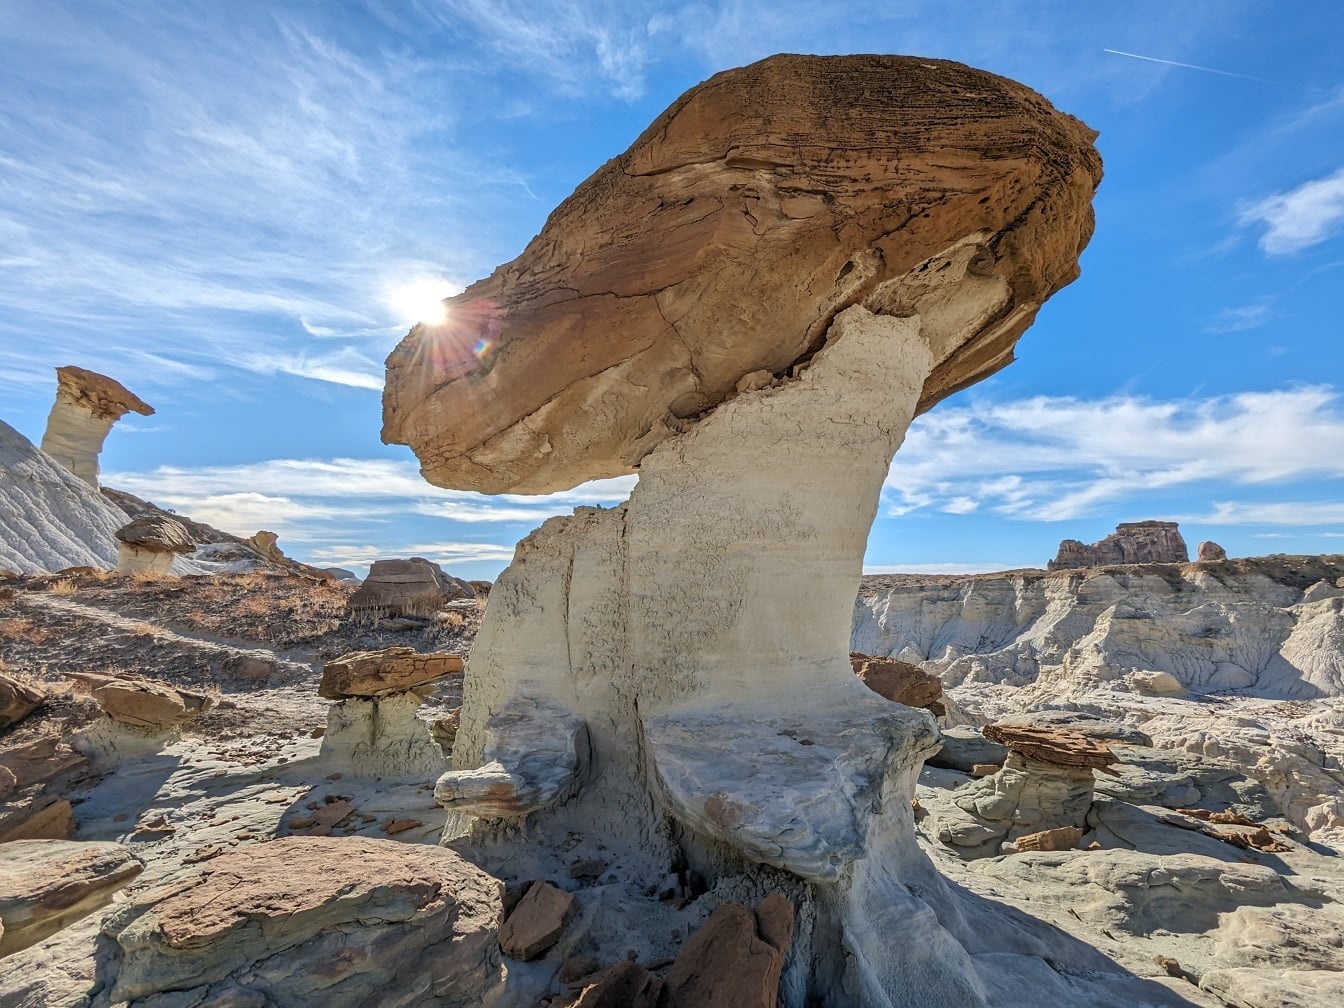 Unik klippeformation ved Coyote Buttes i Sedona ørkenen i Arizona